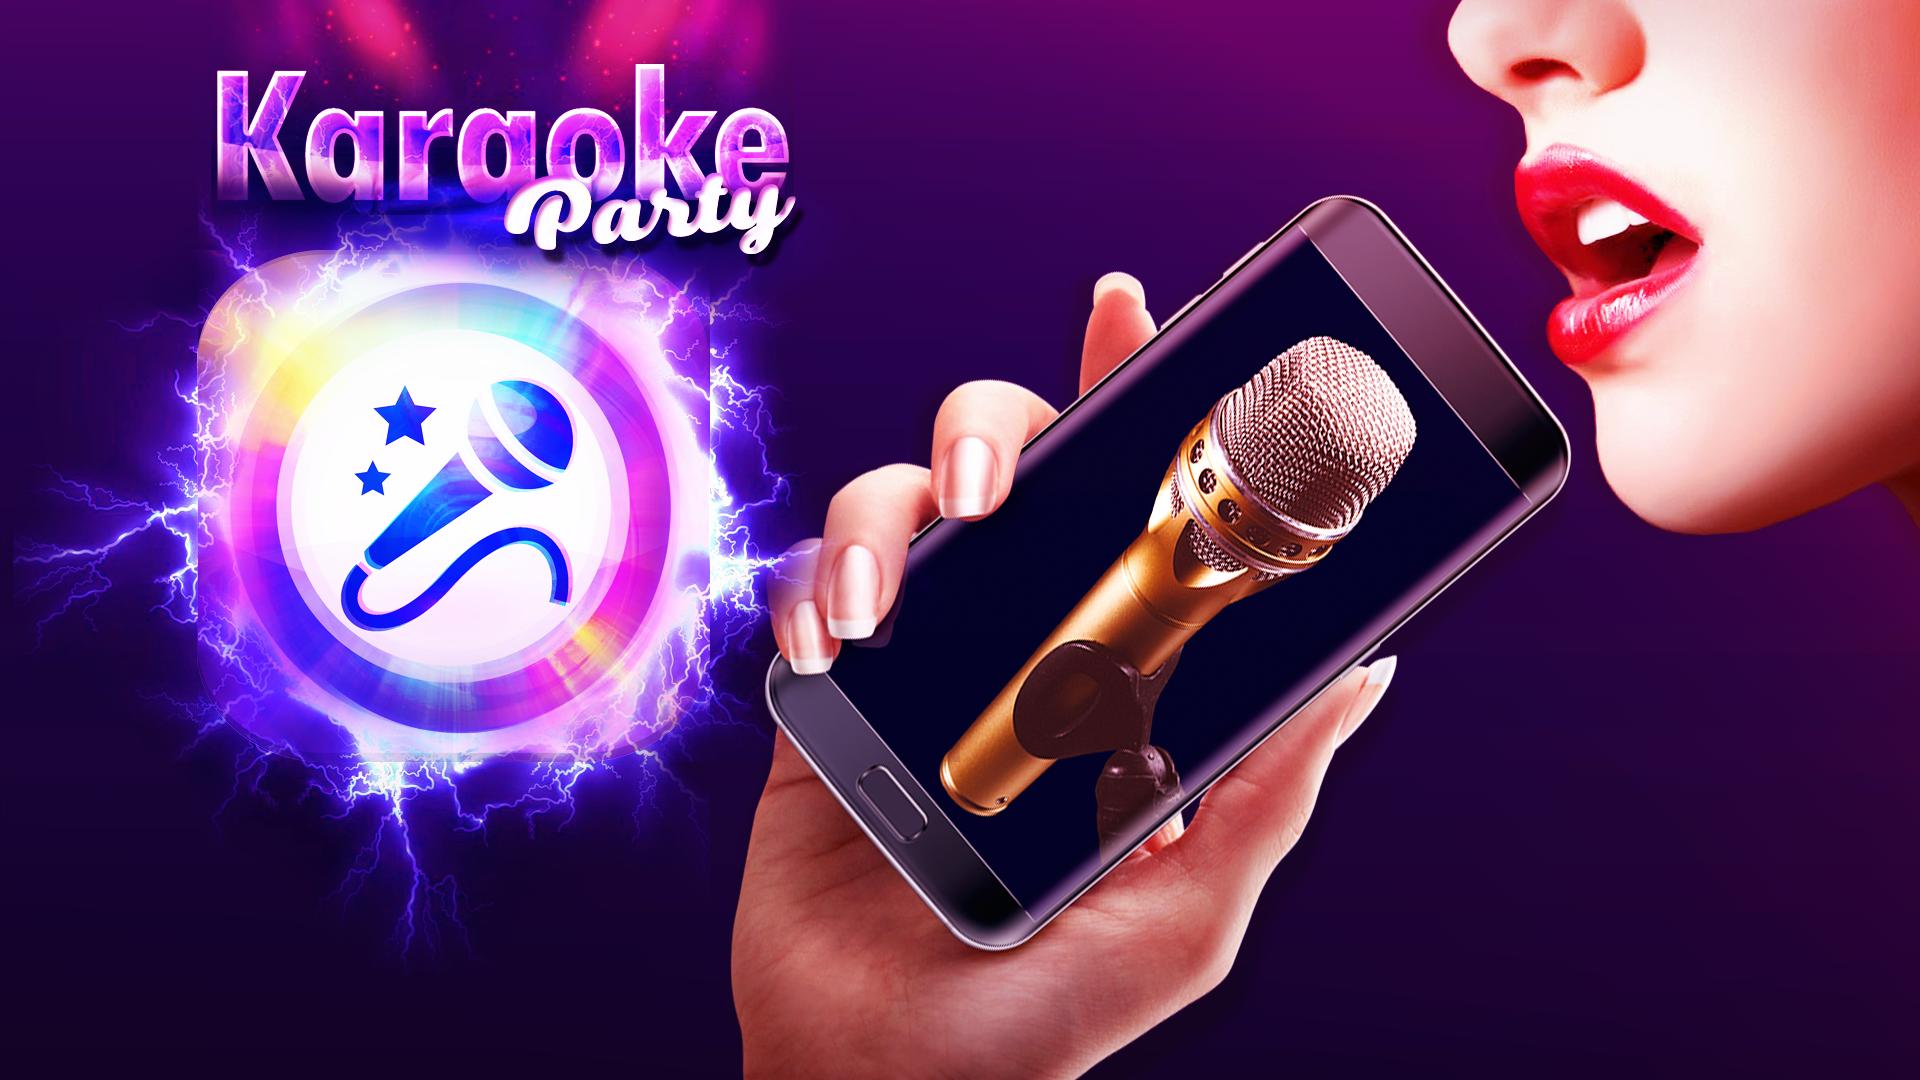 Karaoke downloads. Караоке. Микрофон красивый. Караоке баннер. Реклама караоке микрофона.